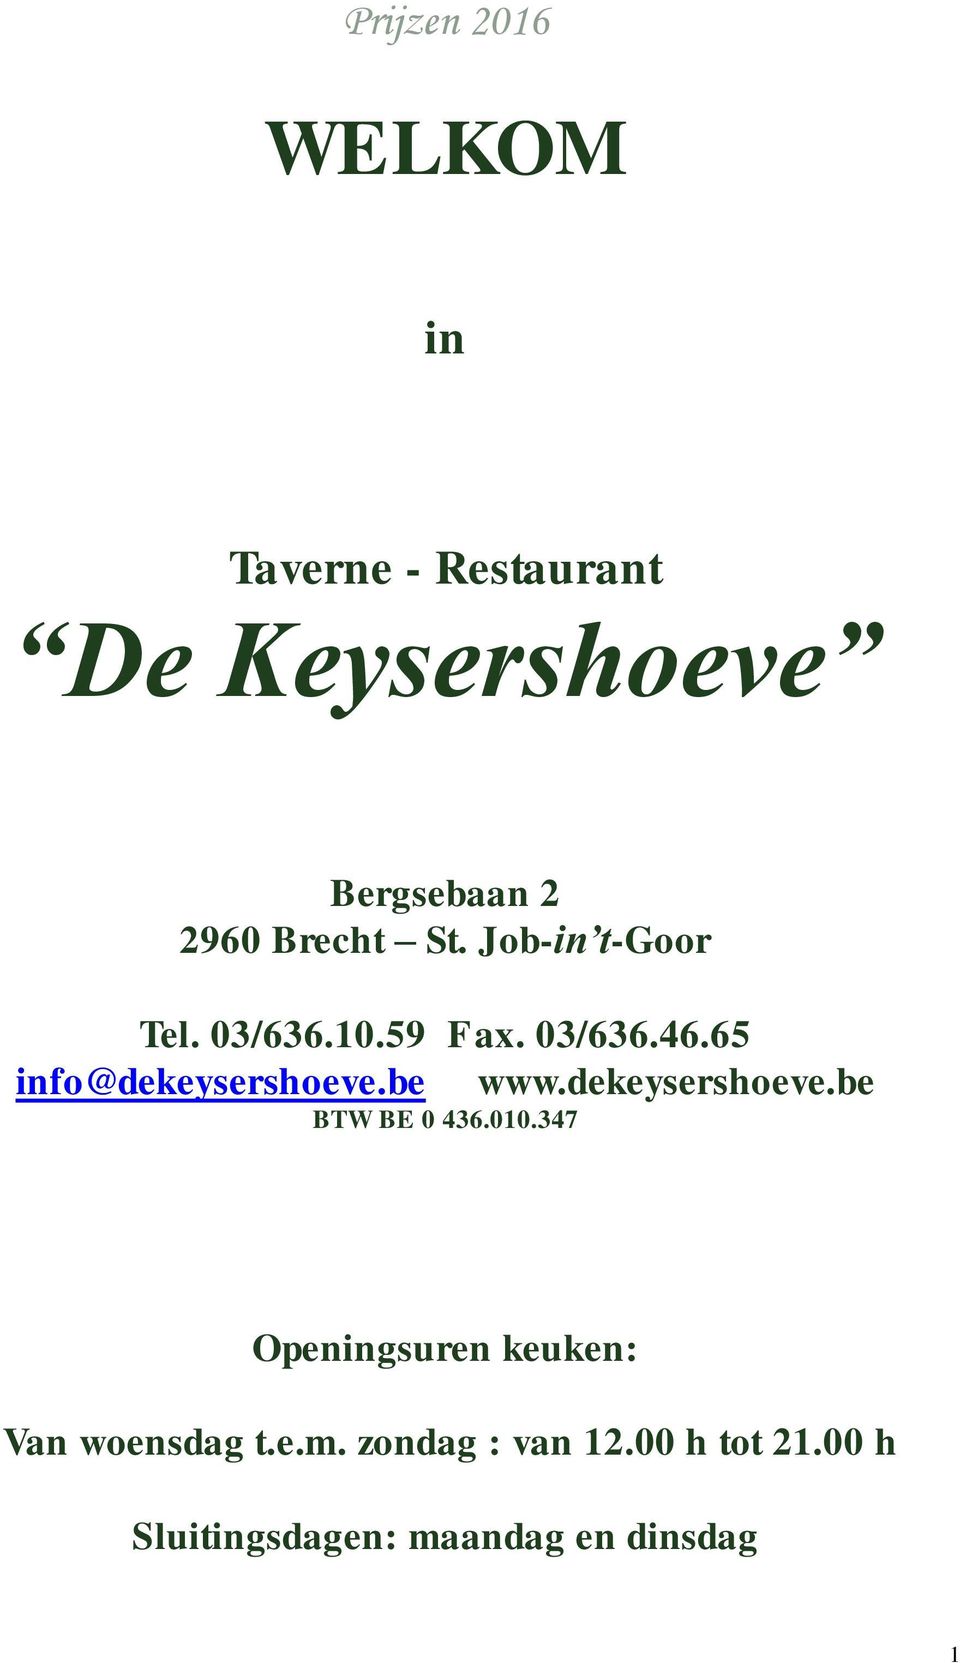 65 info@dekeysershoeve.be www.dekeysershoeve.be BTW BE 0 436.010.